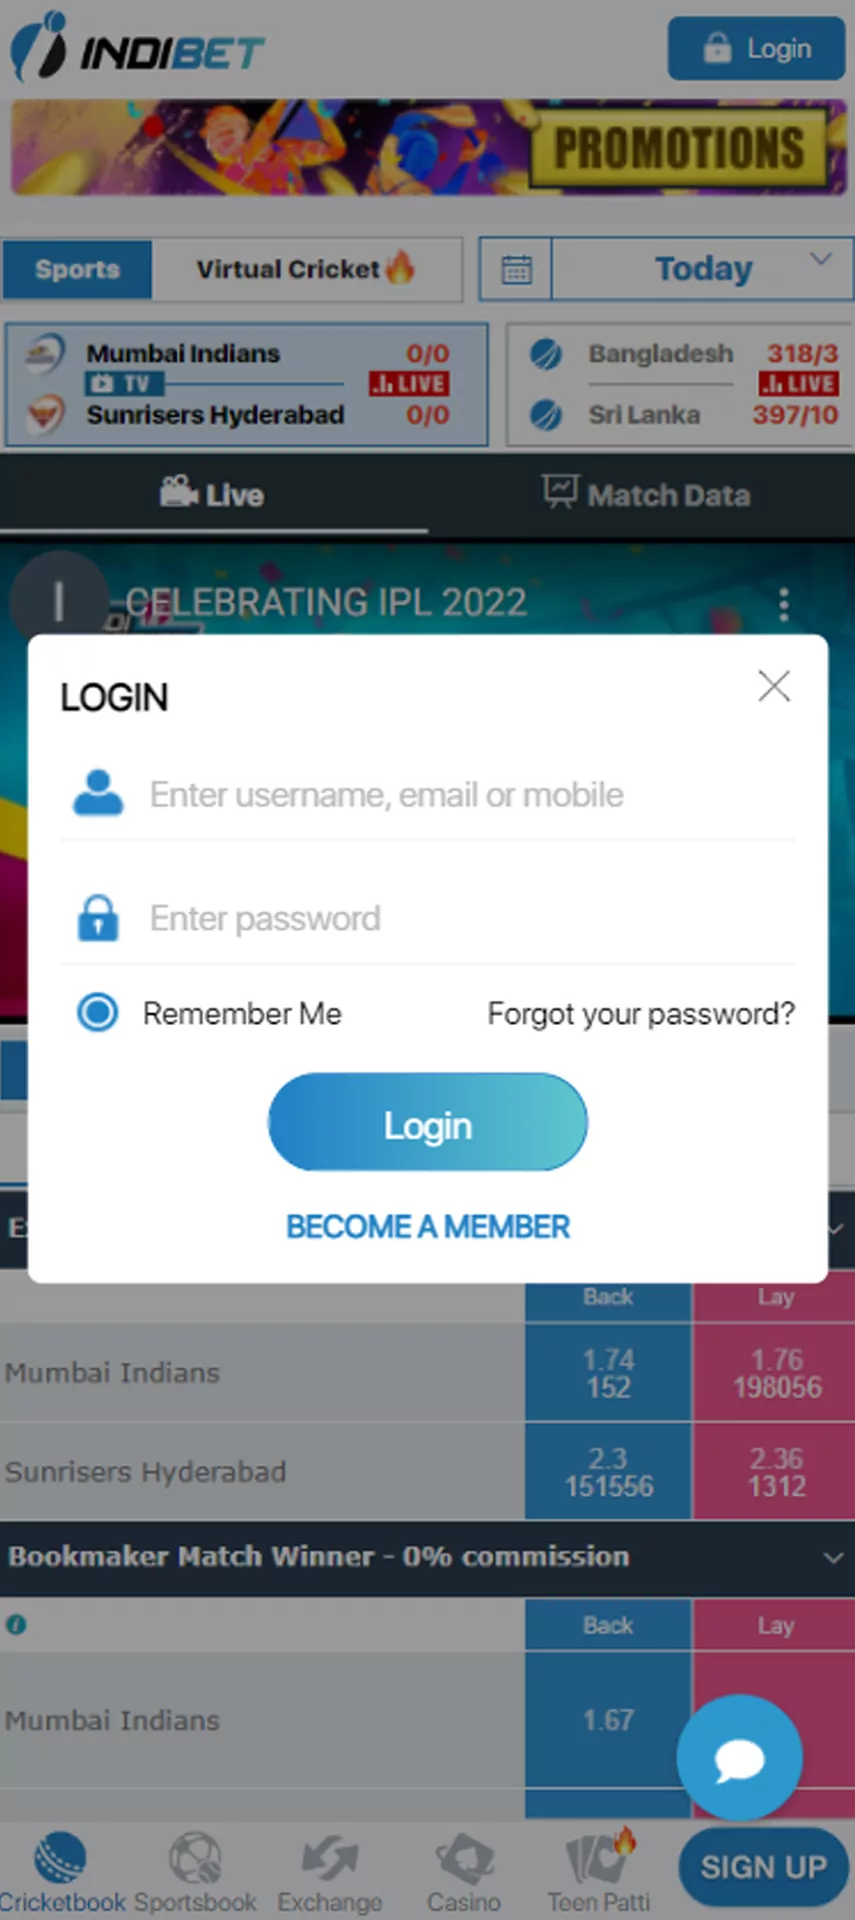 You can log into your account via Indibet App using the same username and password.